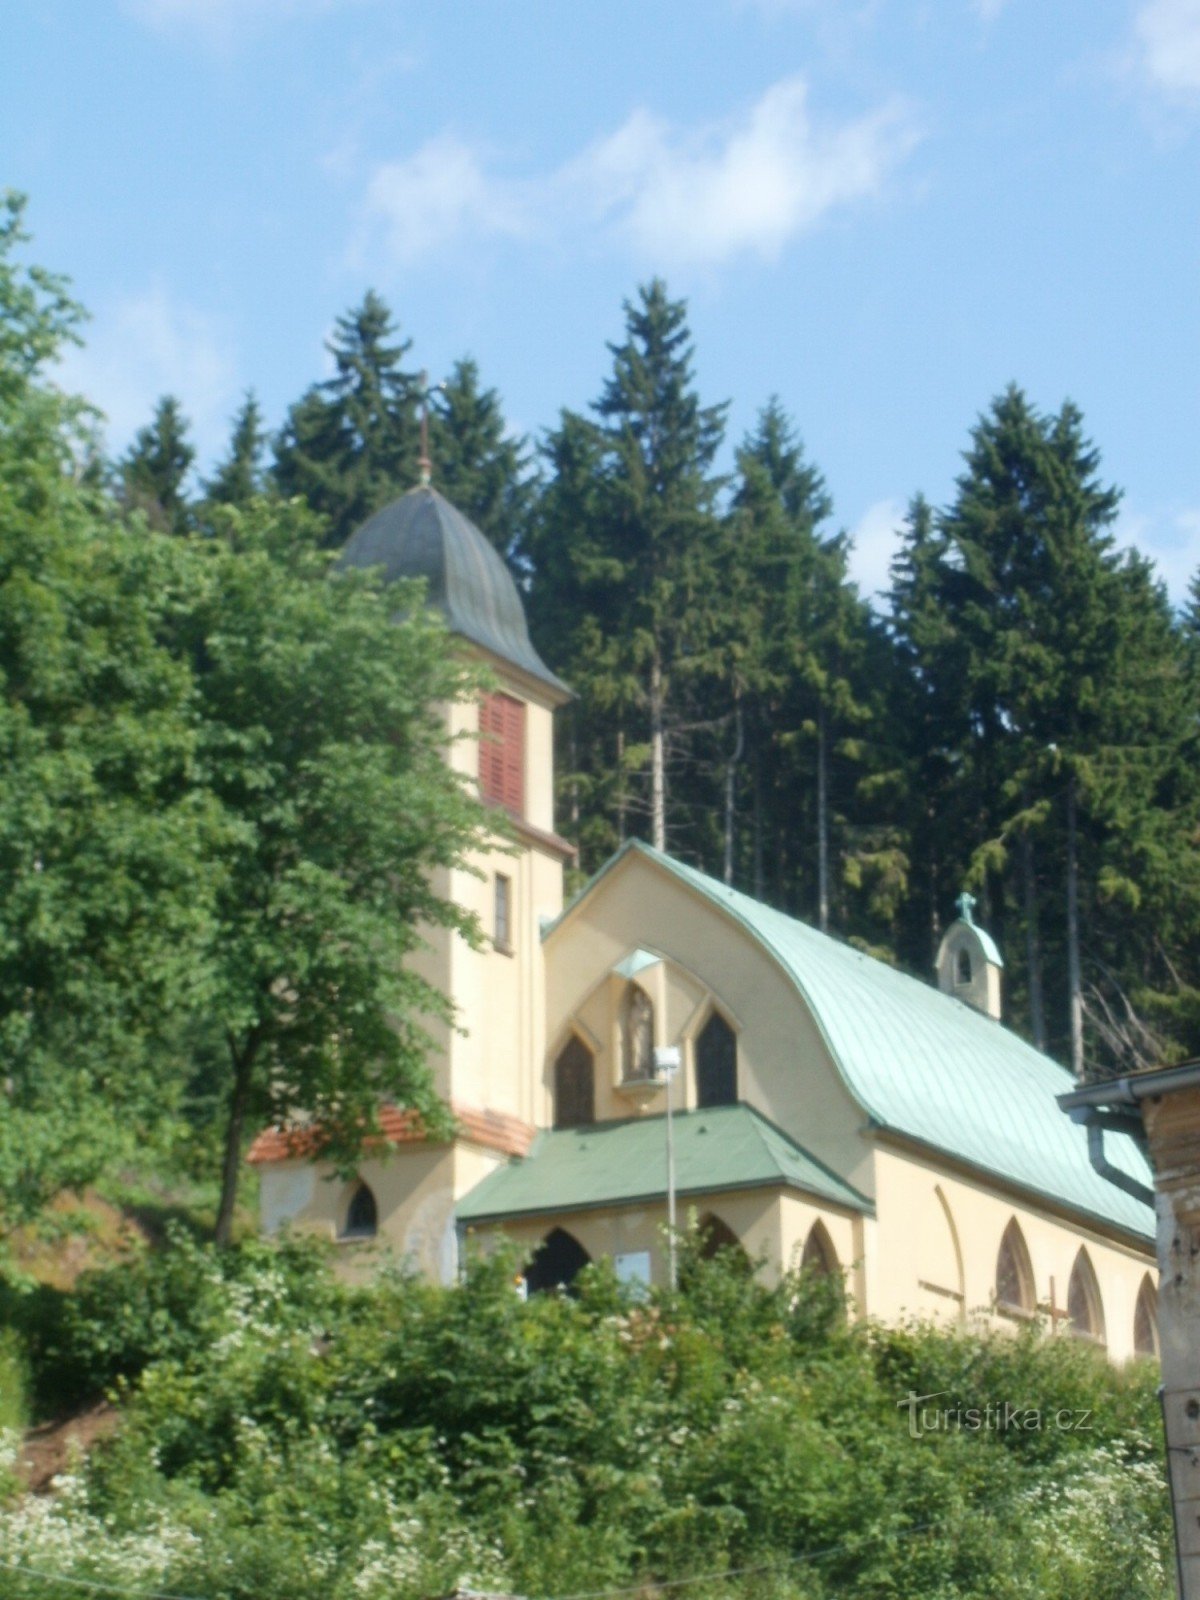 Dolní Maršov - church of St. Joseph